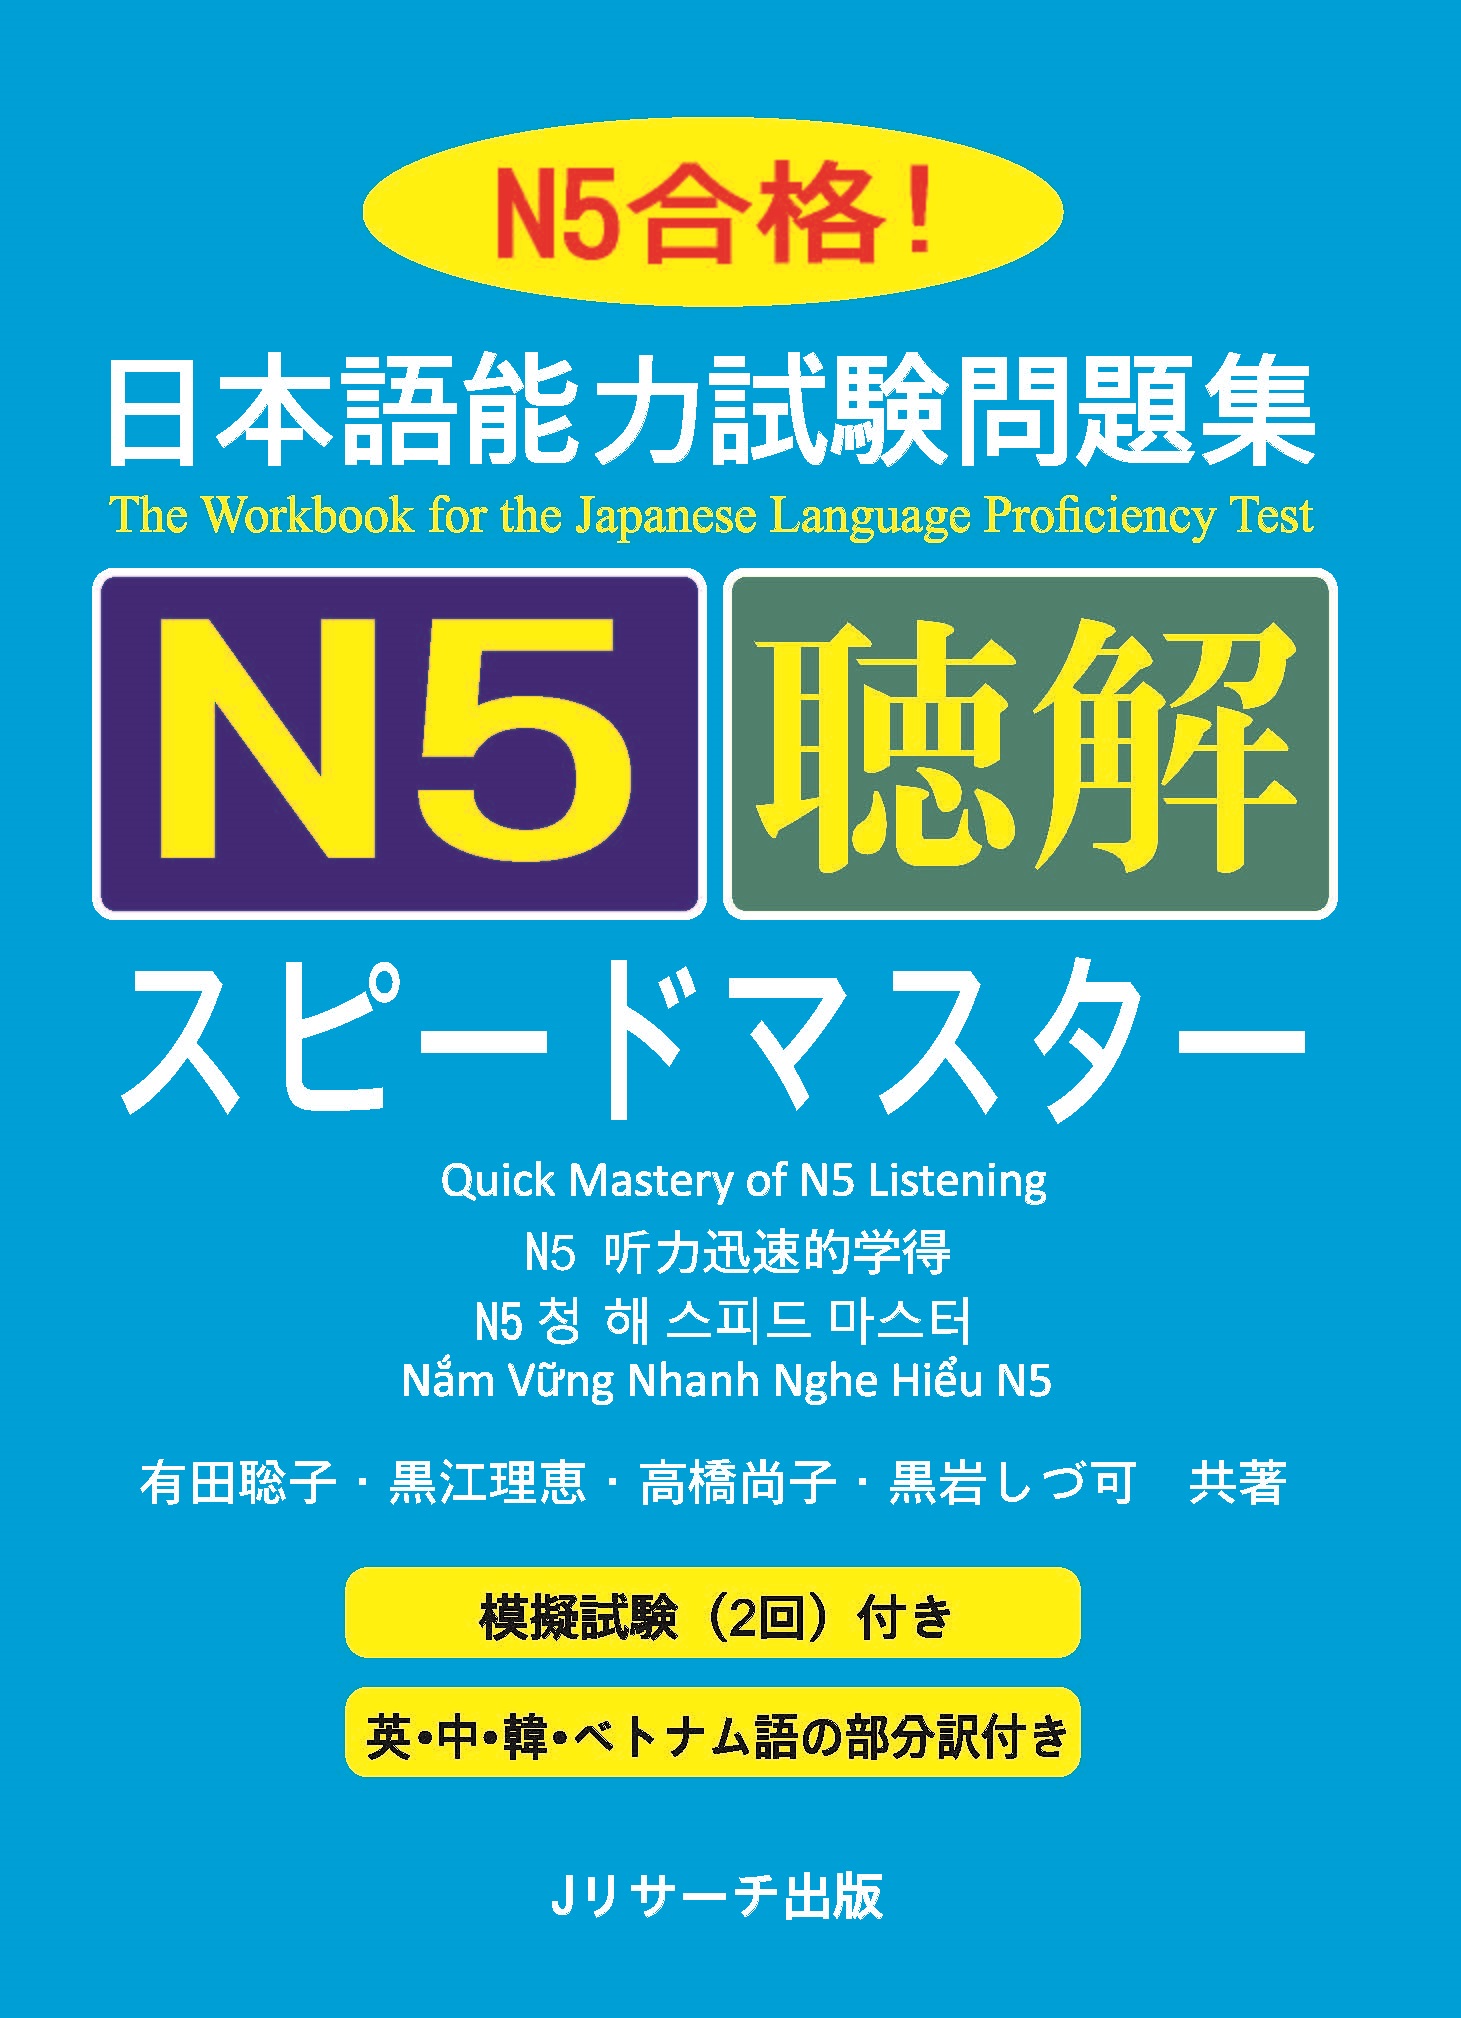 Giáo Trình Speed Master N5 – Phần Nghe Hiểu CHOUKAI | 日本語能力試験問題集 N5聴解スピードマスター